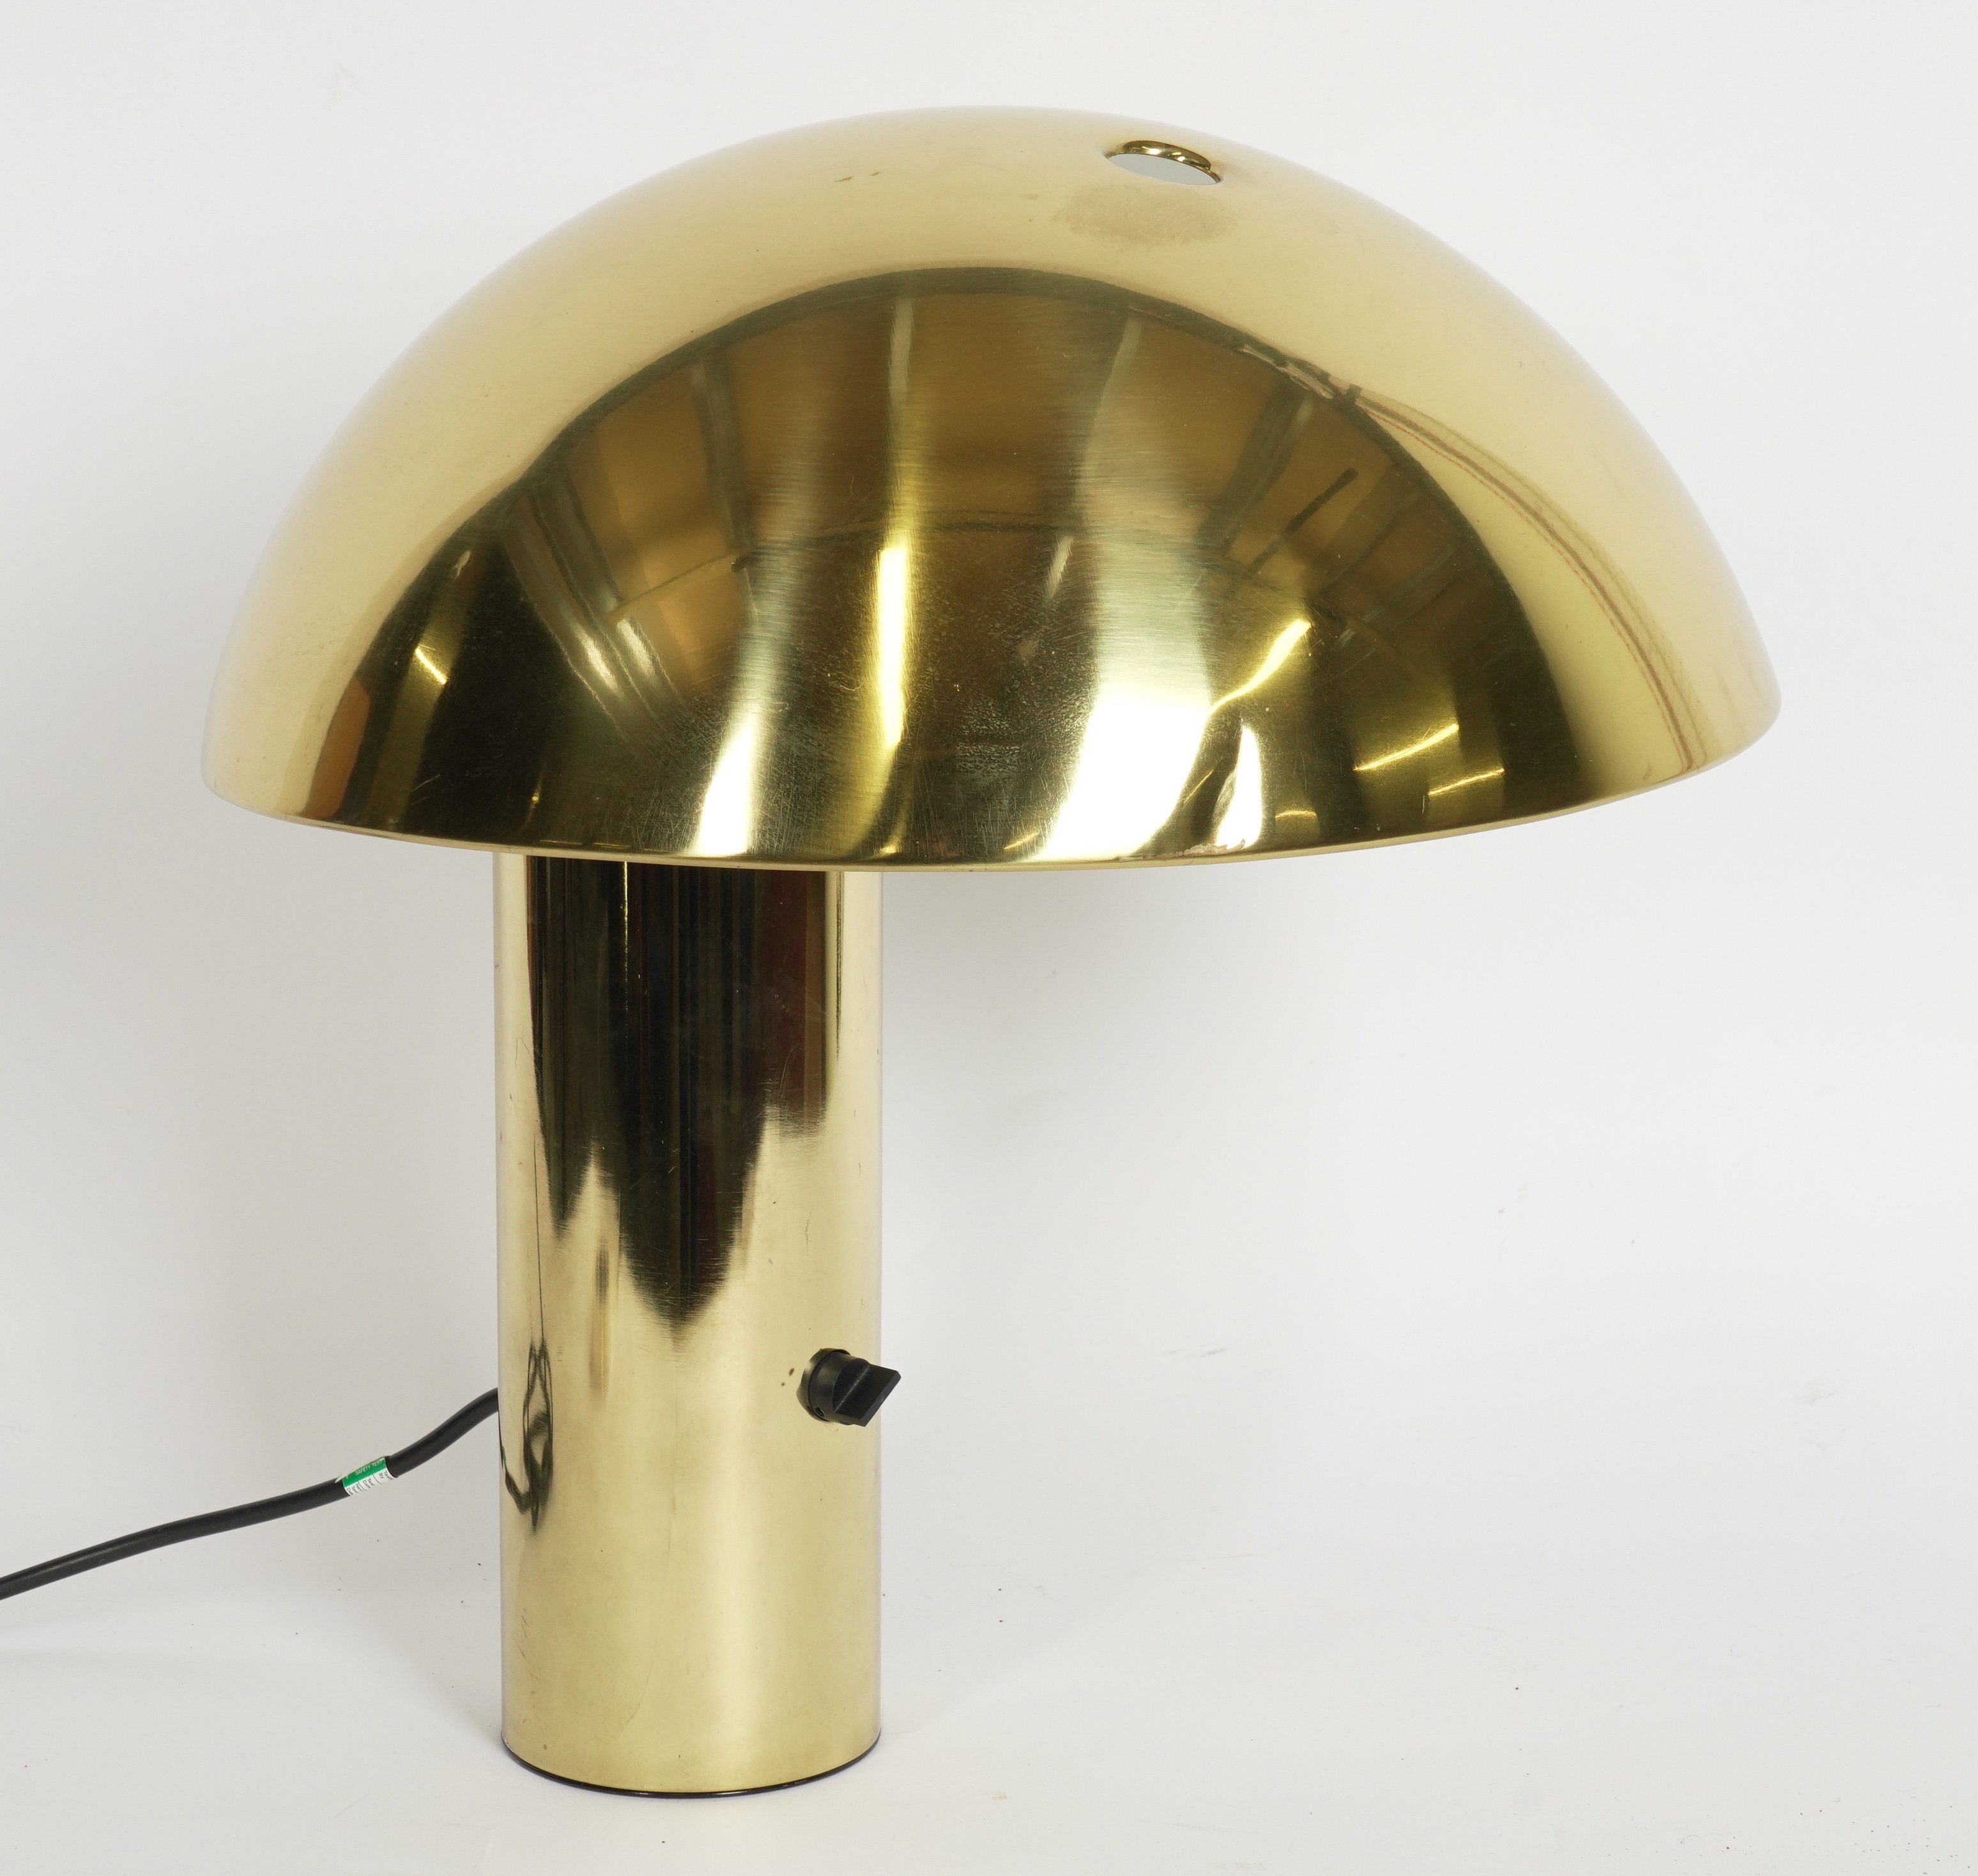 FRANCO MIRENZI FOR VALENTI: A GILT-METAL VAGA TABLE LAMP